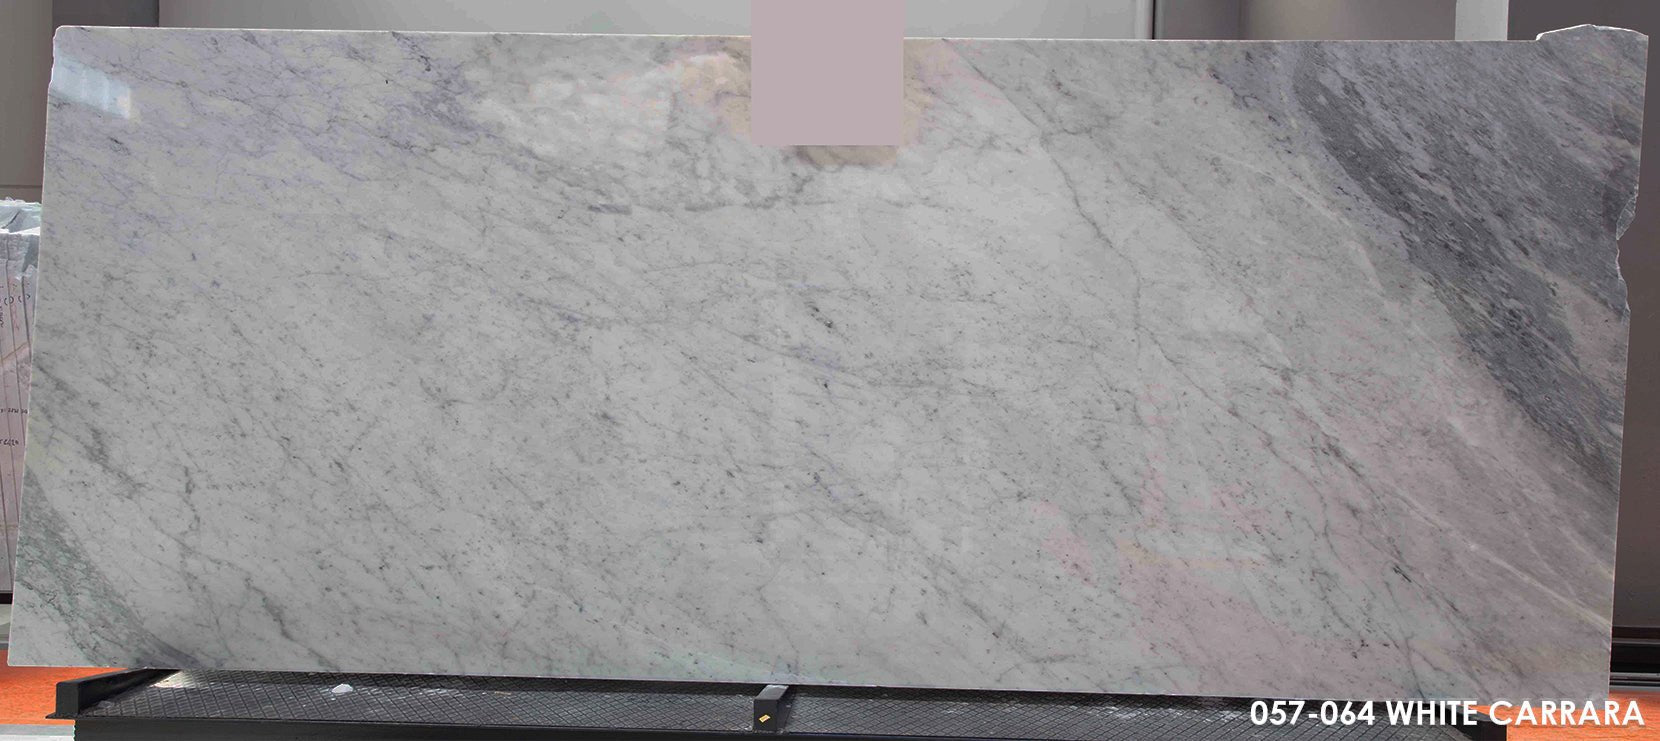 White Carrara Marble Slabs - S(057-064) - Emperor Marble